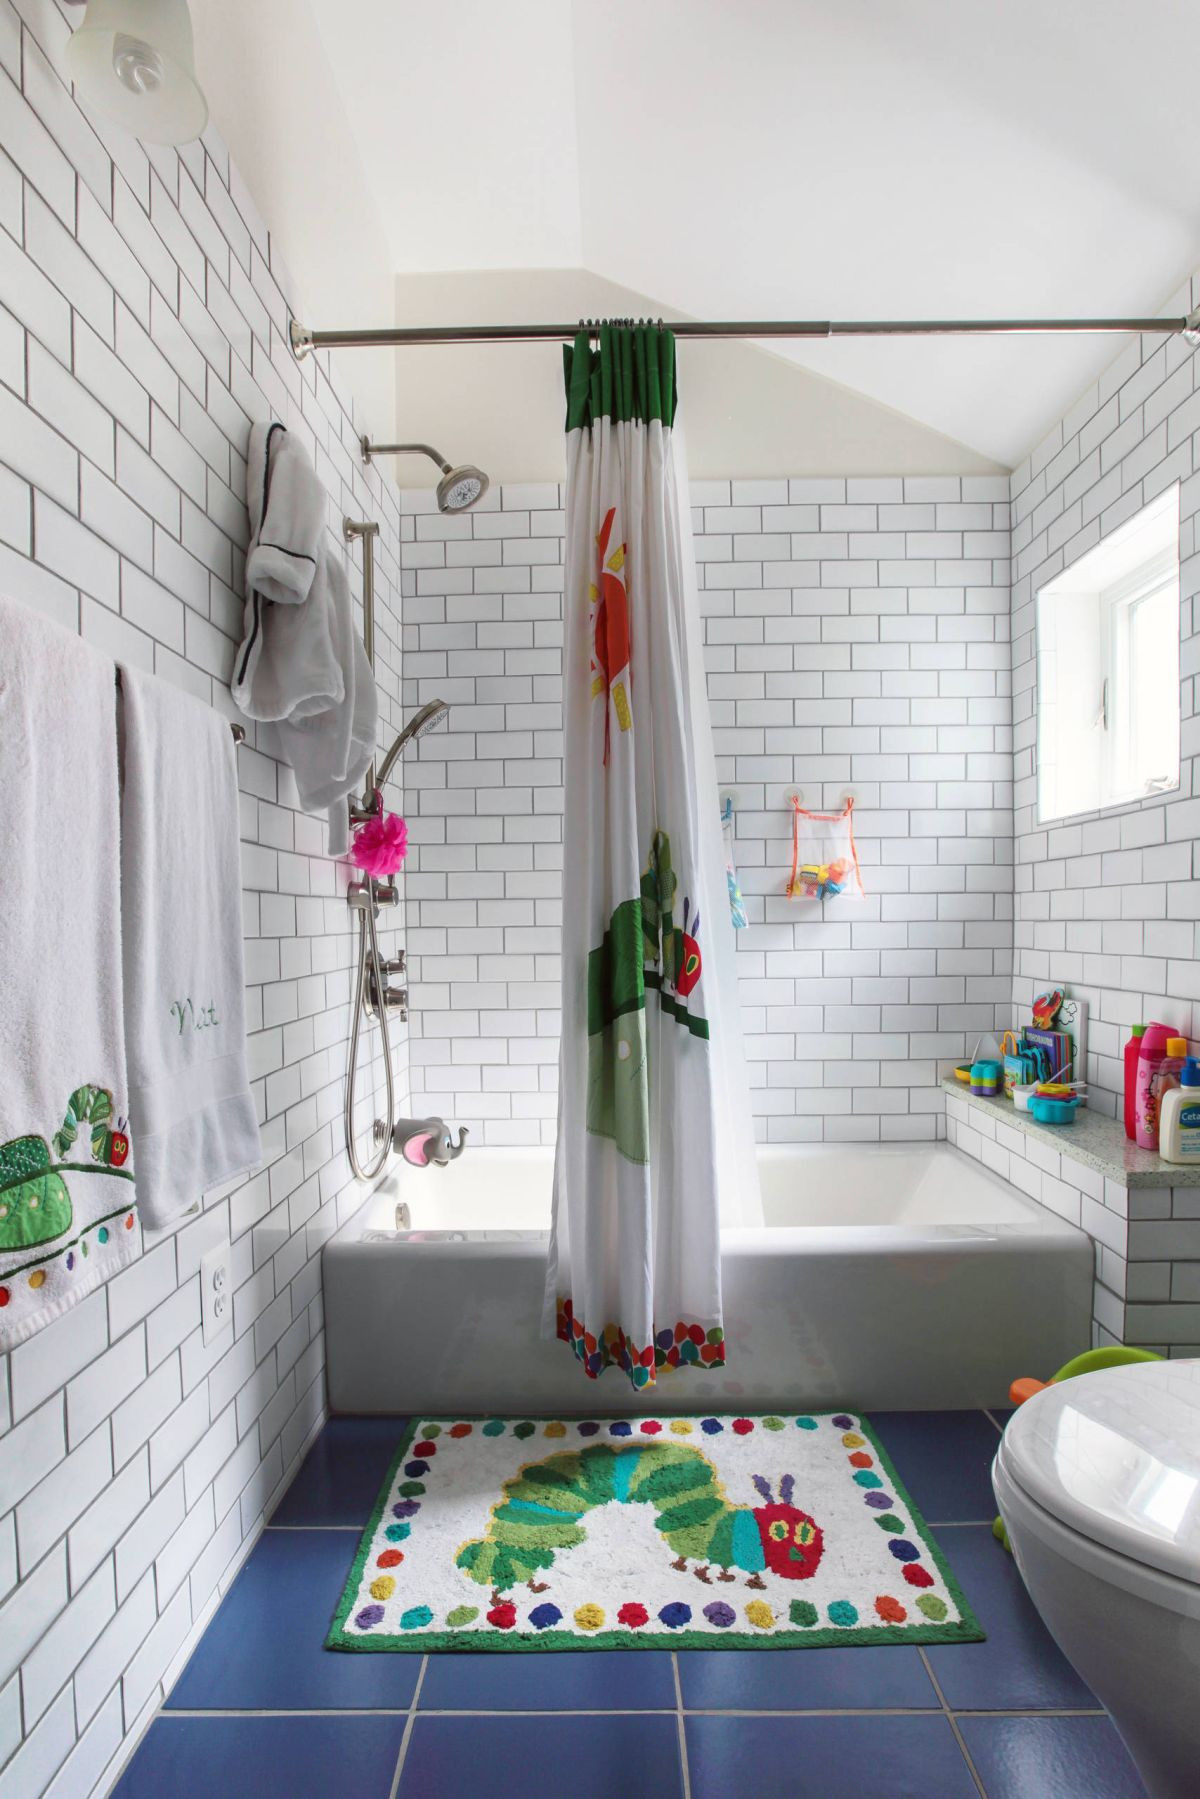 Kids Bathroom Accessories
 12 Tips for The Best Kids Bathroom Decor